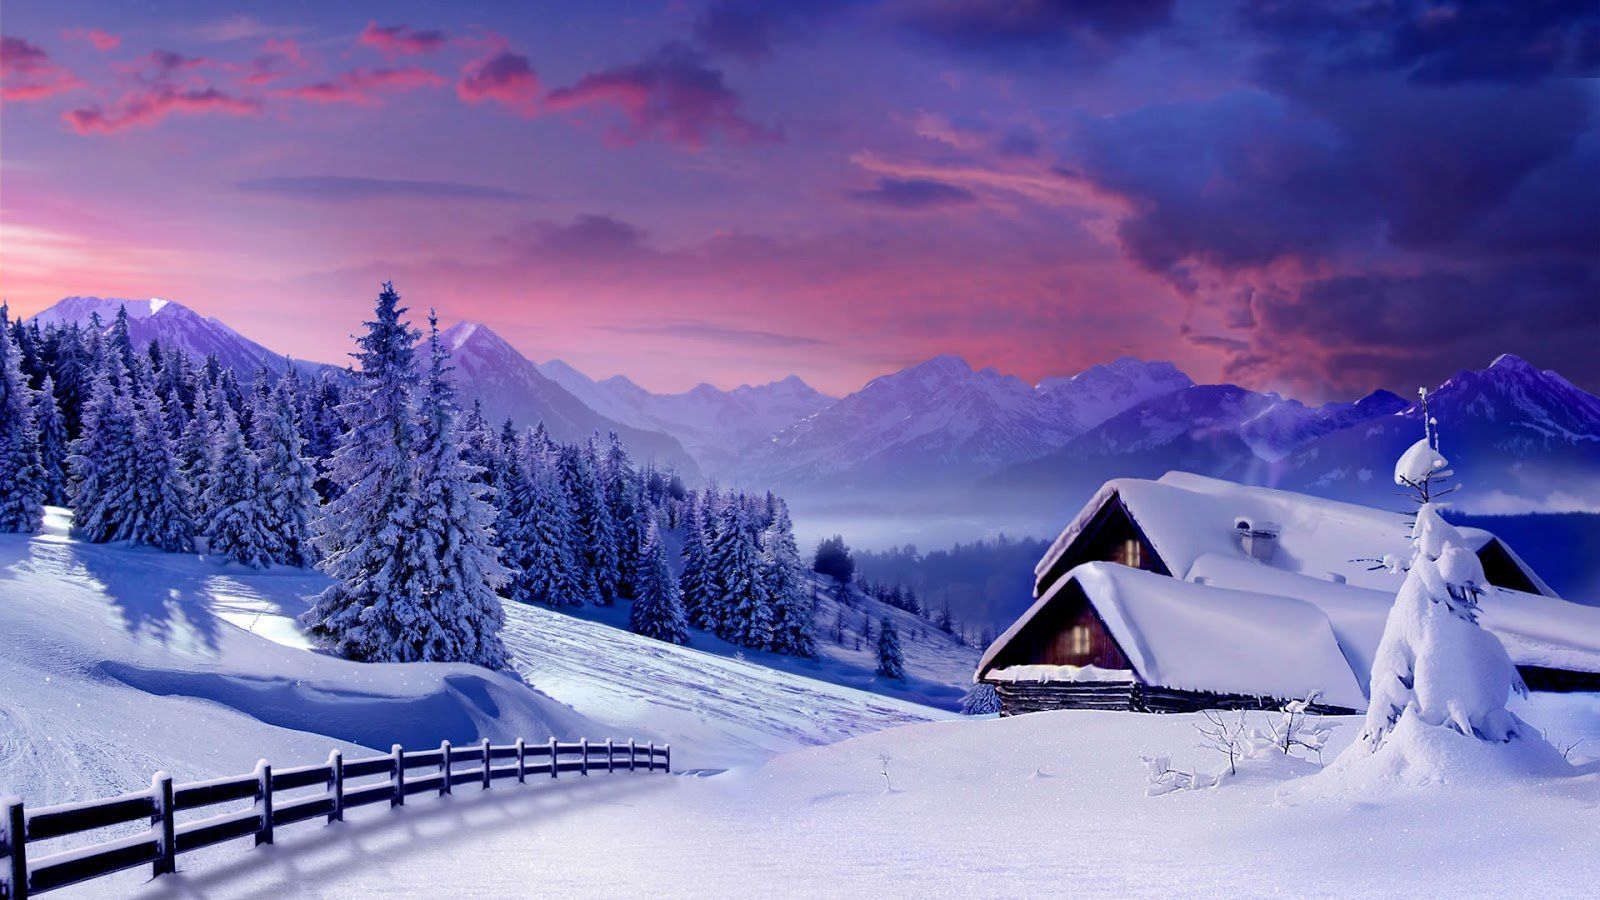 46+] HD Winter Wallpapers 1080p